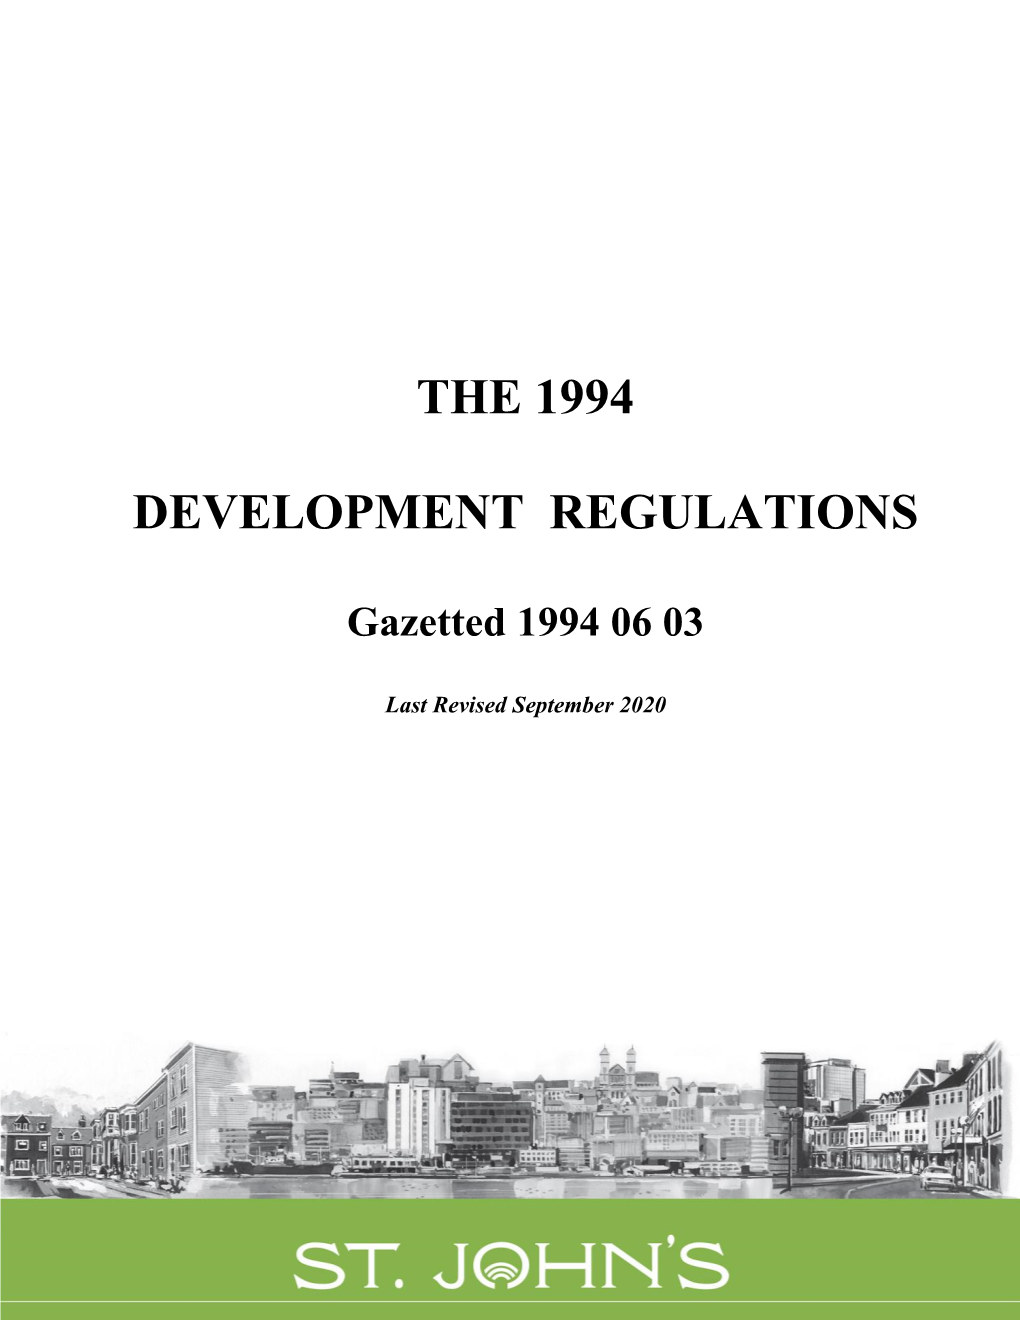 Development Regulations